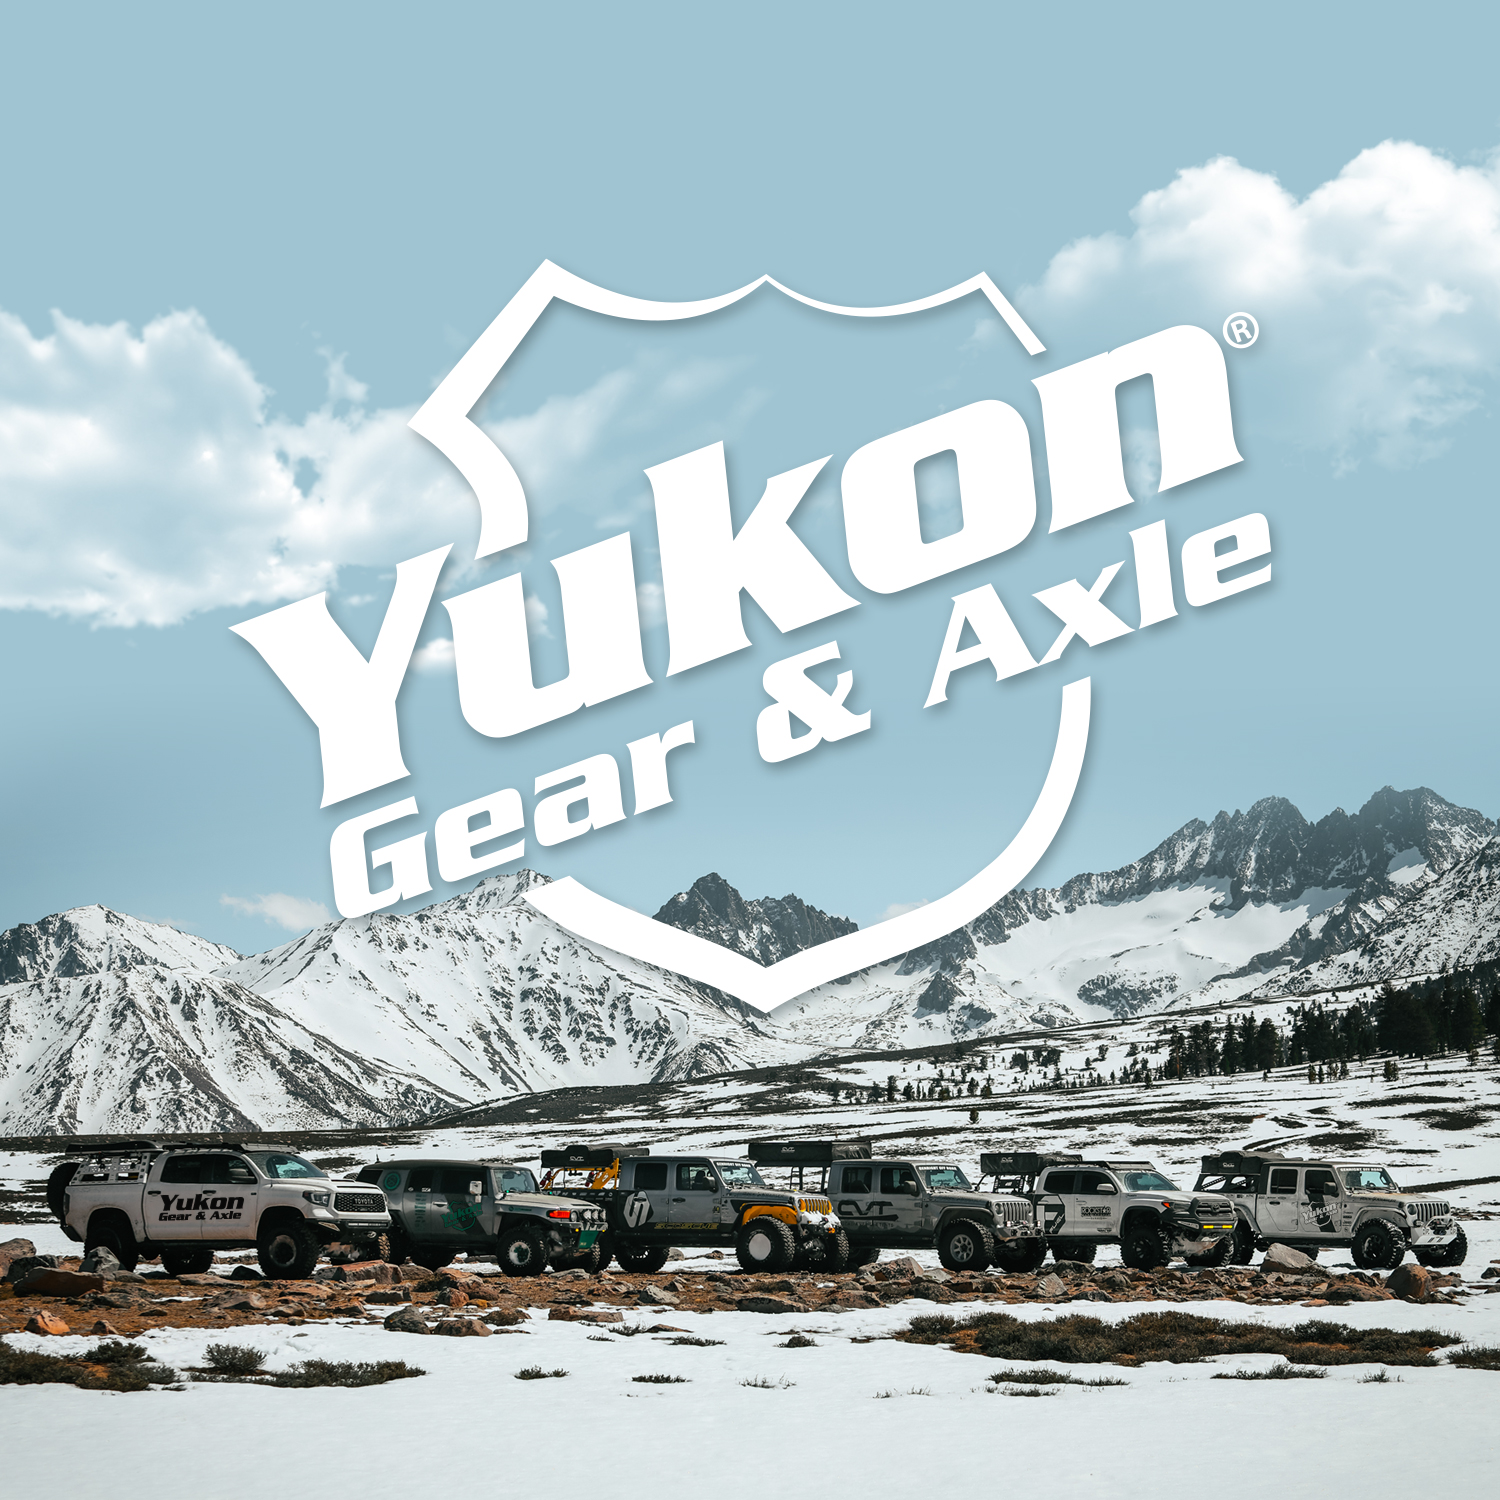 Yukon high performance ring & pinion gear set GM 12T, thick, 4.56 ratio 